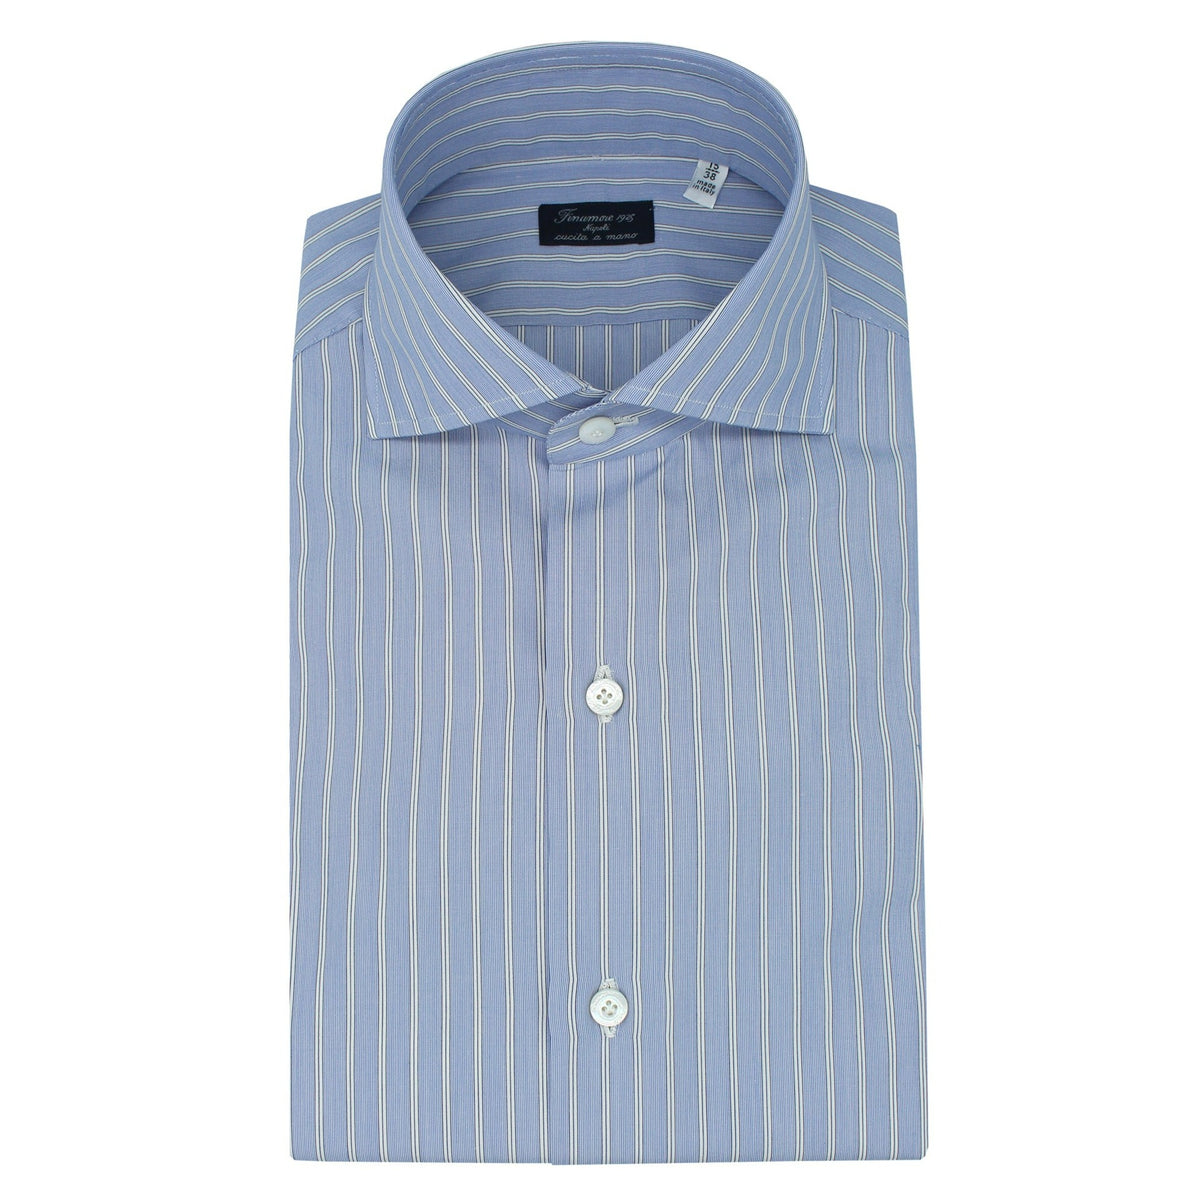 Naples regular fit cotton micro striped light blue and blue shirt